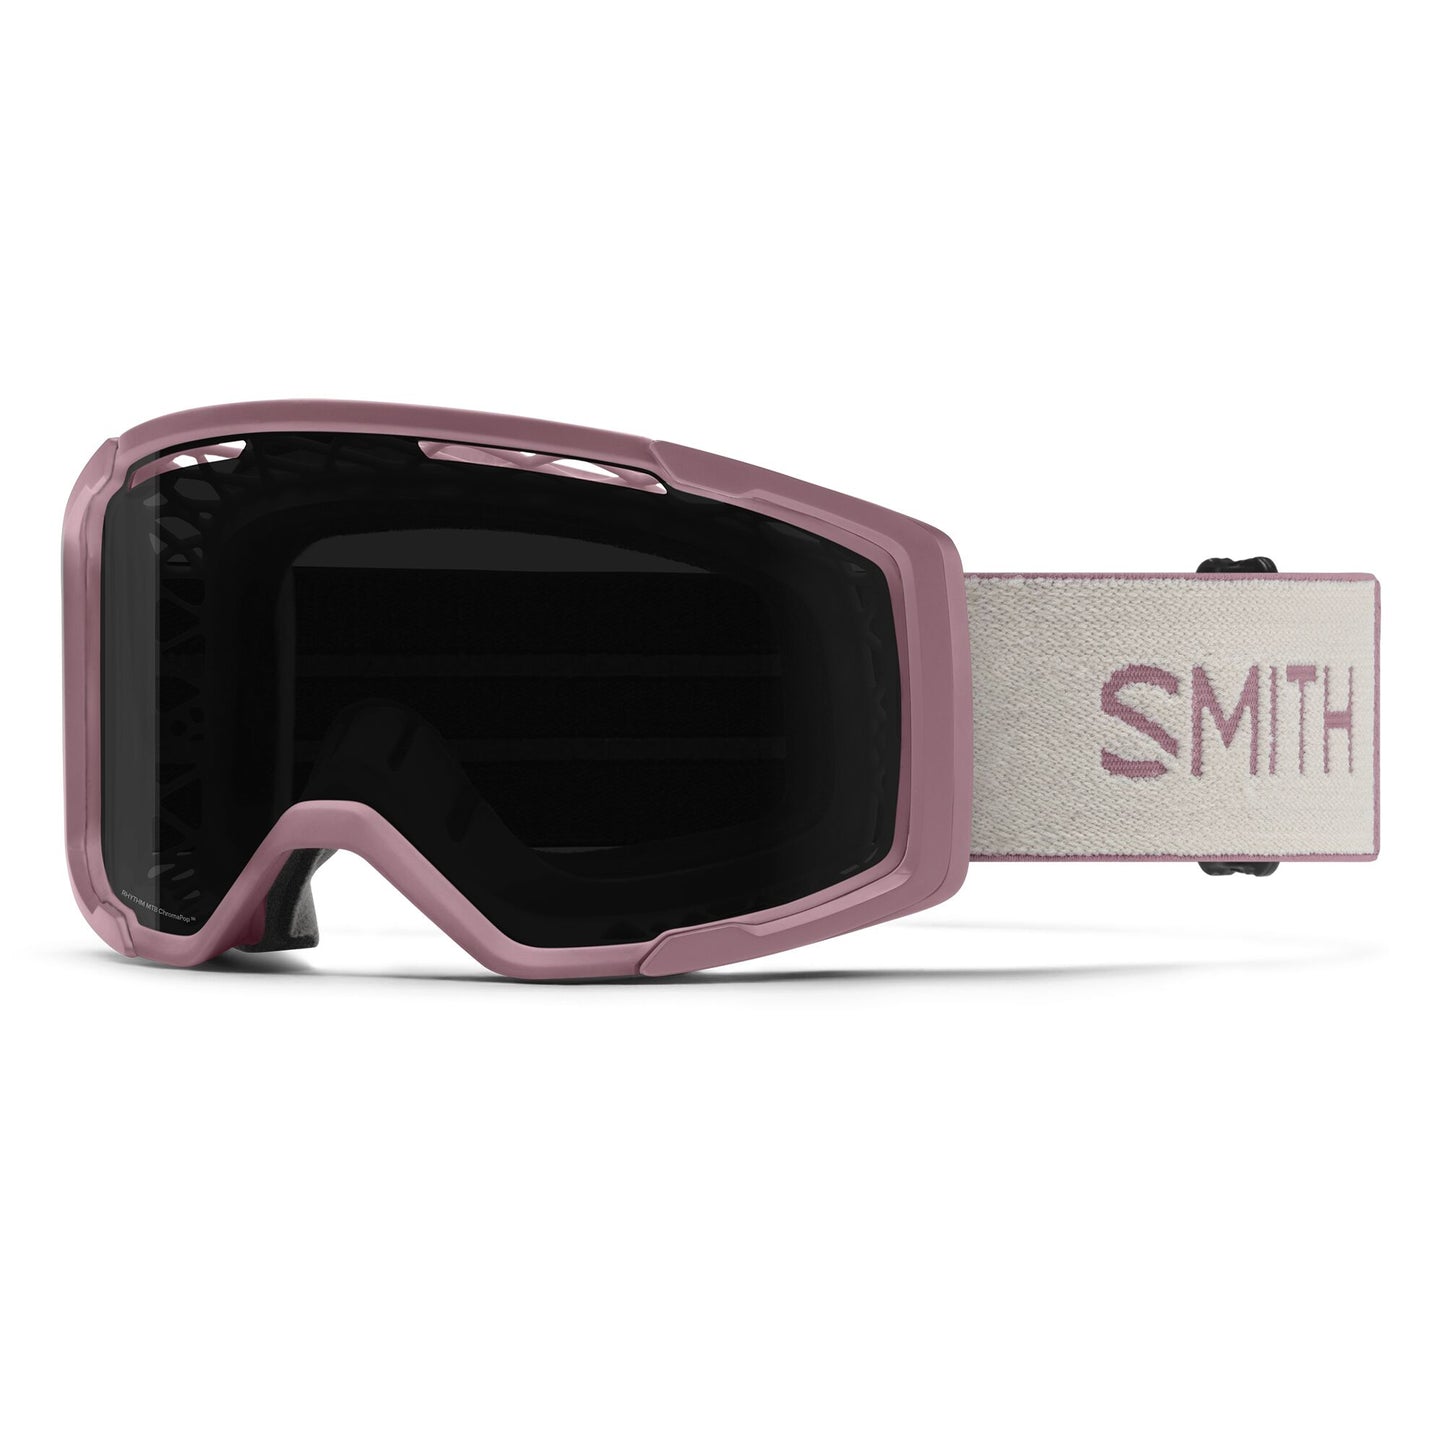 Smith Rhythm Goggles - One Size Fits Most - Dusk - Bone - ChromaPop Sun Black